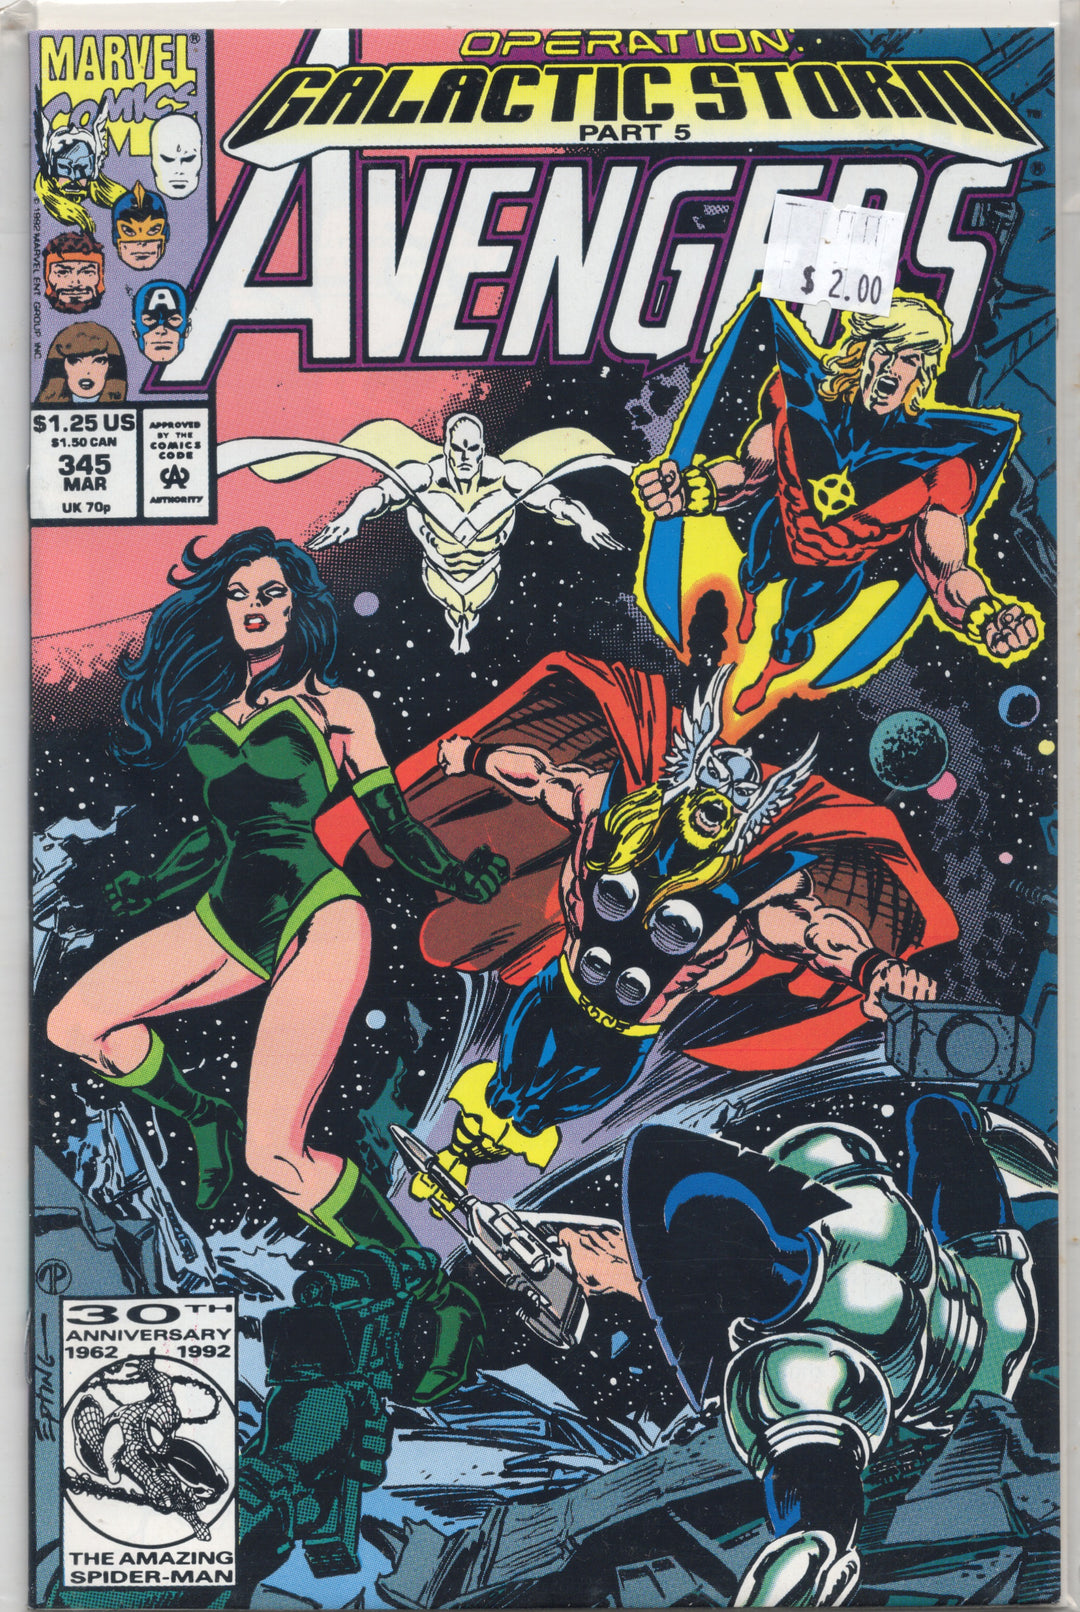 The Avengers #345